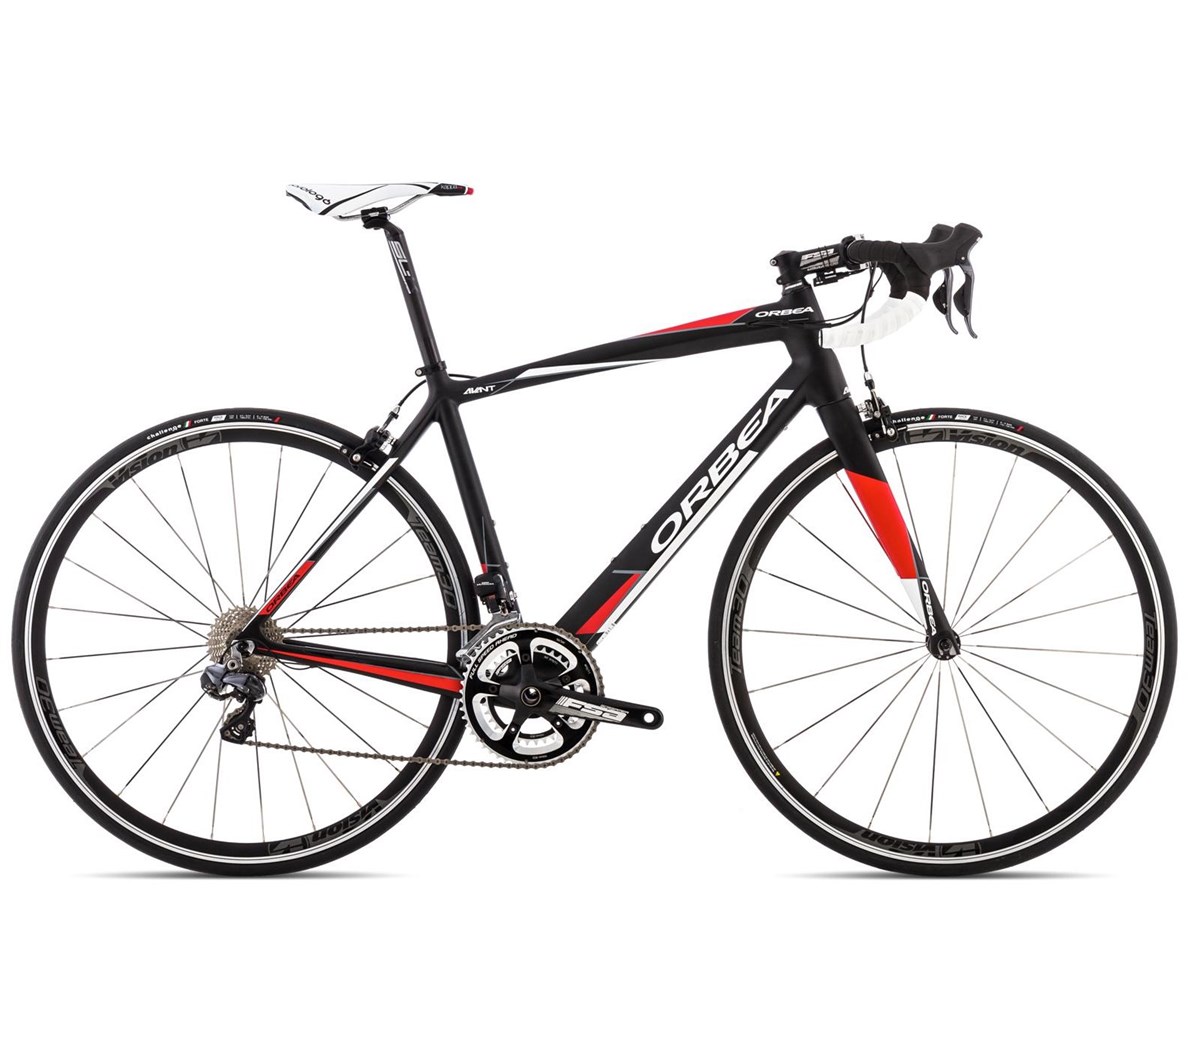 Orbea Avant M20Si  2015 - Road Bike product image